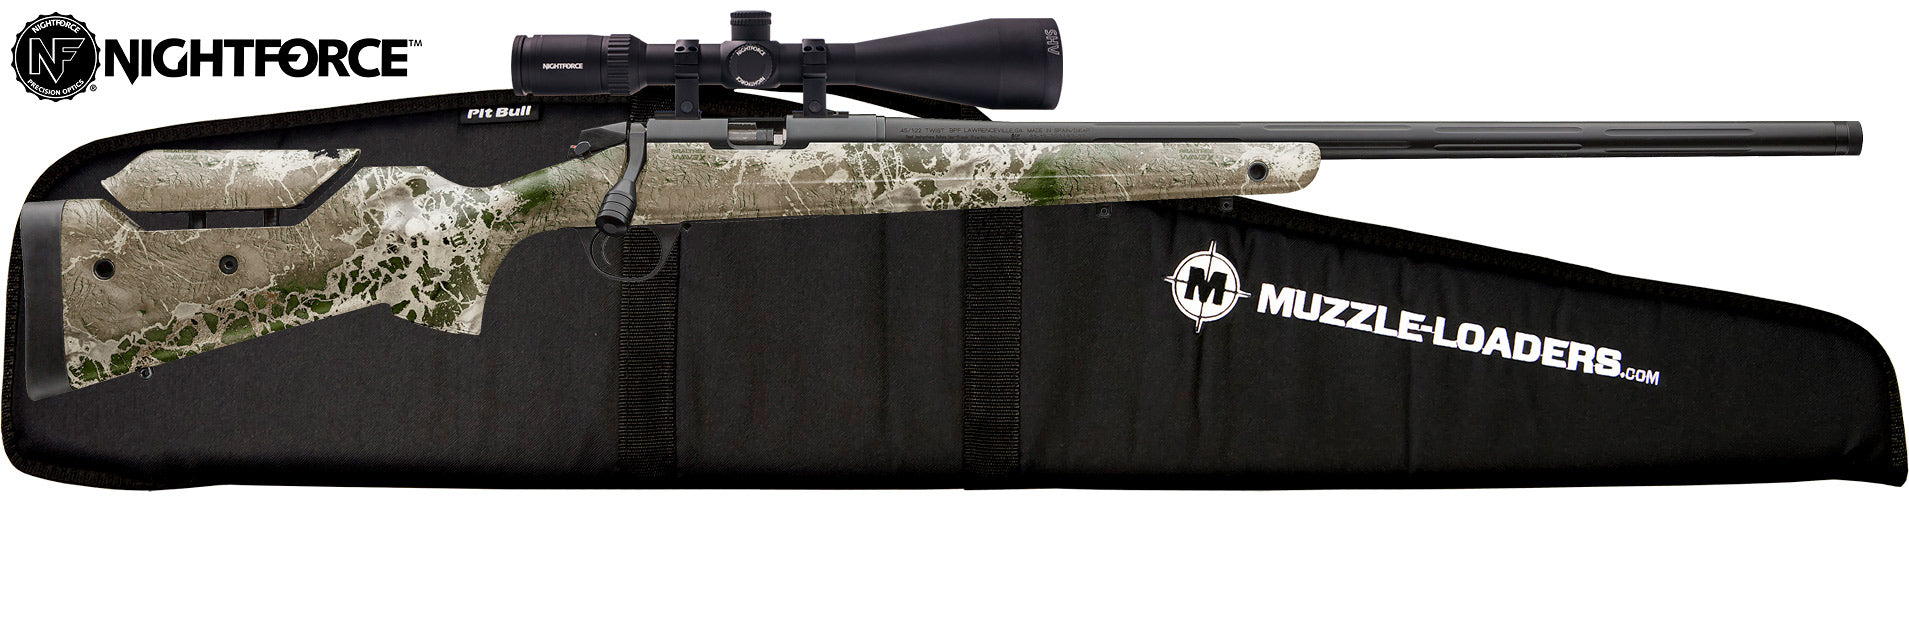 CVA® Paramount HTR™ Rifle - .40 Cal Nitride w/ Nightforce™ SHV 4-14x56mm F2 MOA Scope - 1:20 Twist - PR3504SHV1